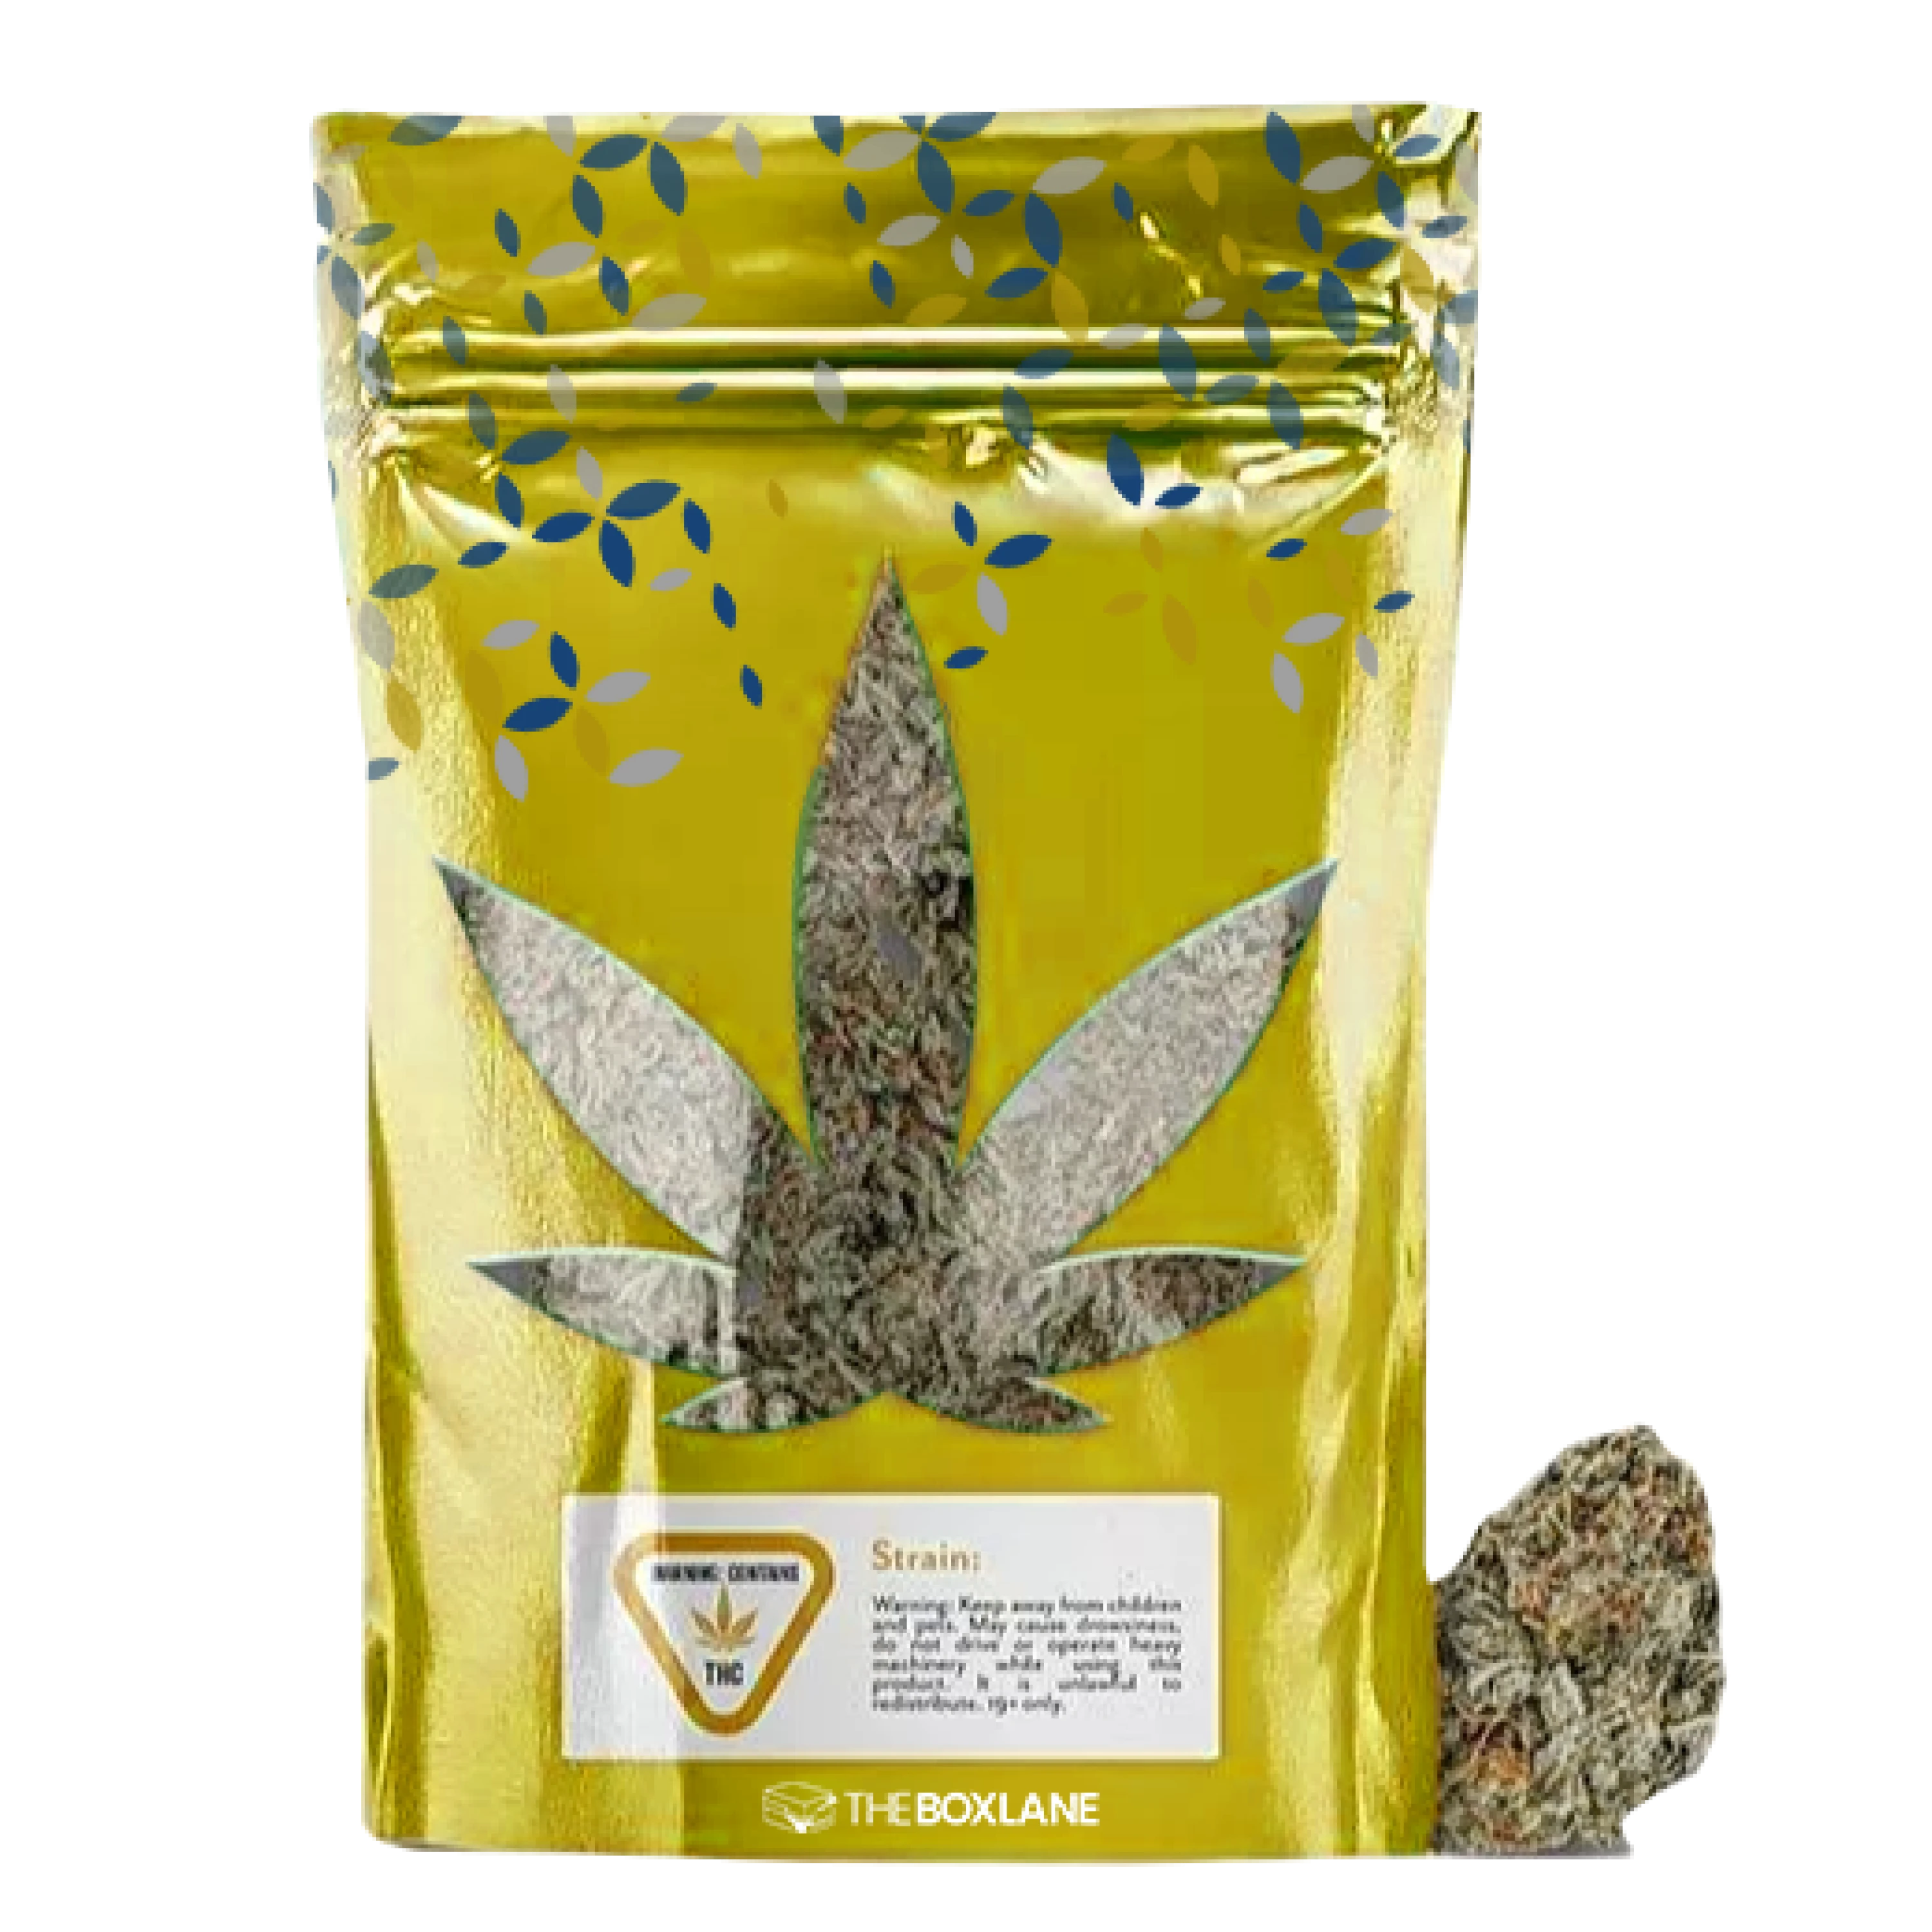 Carousel cannabis mylar bags packaging image 3 | The Box Lane